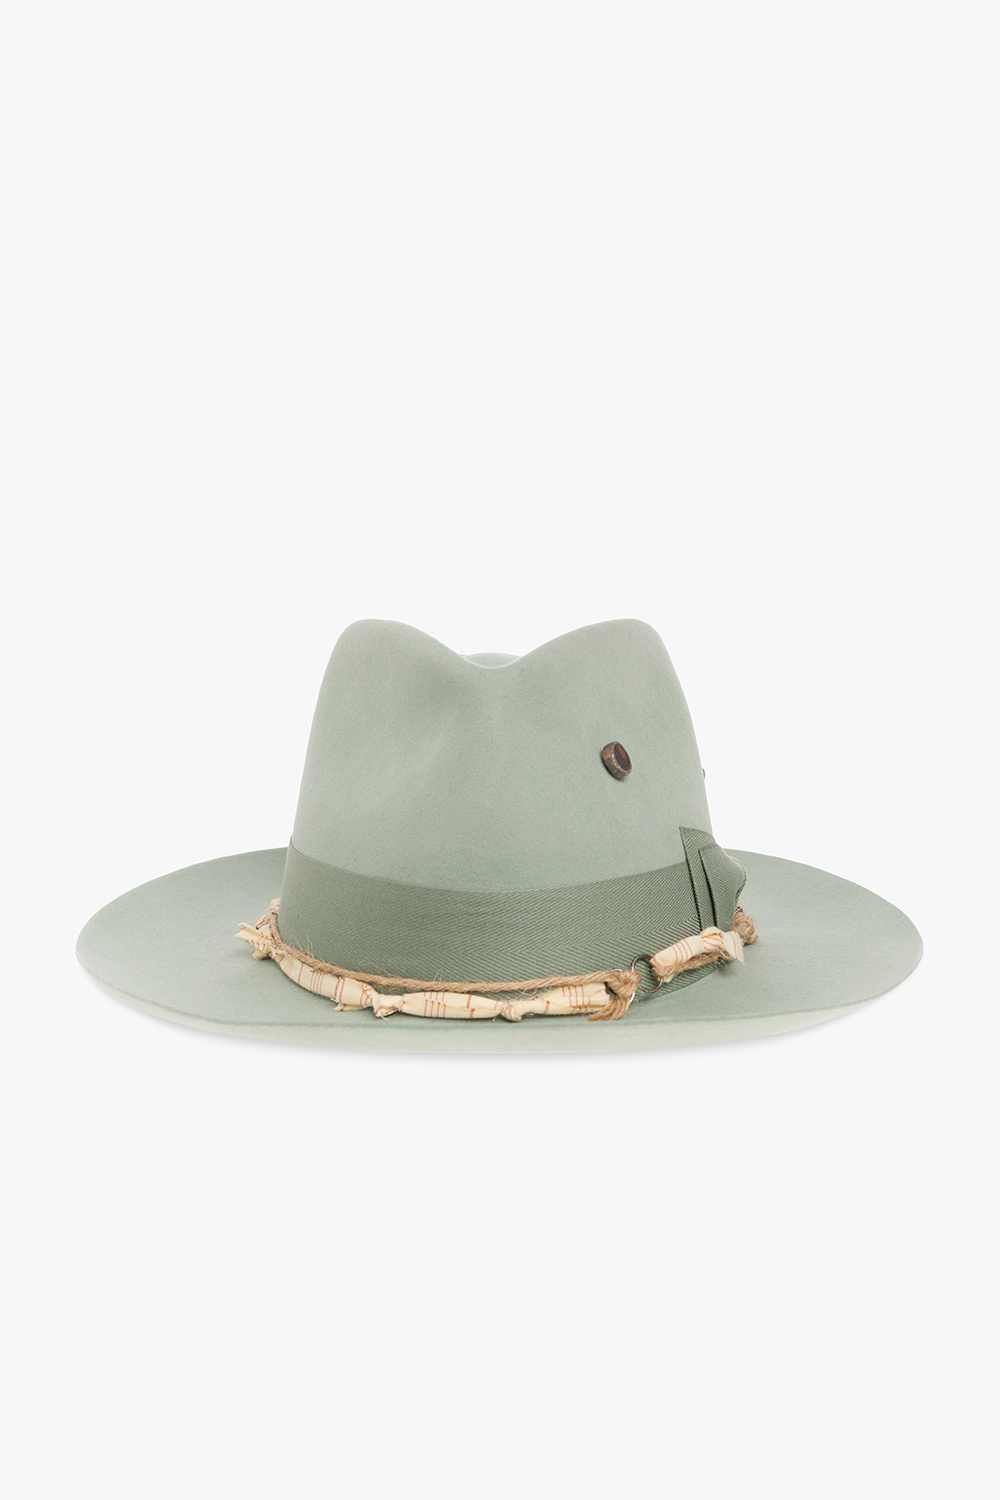 Nick Fouquet ‘Double Eleven’ fedora hat